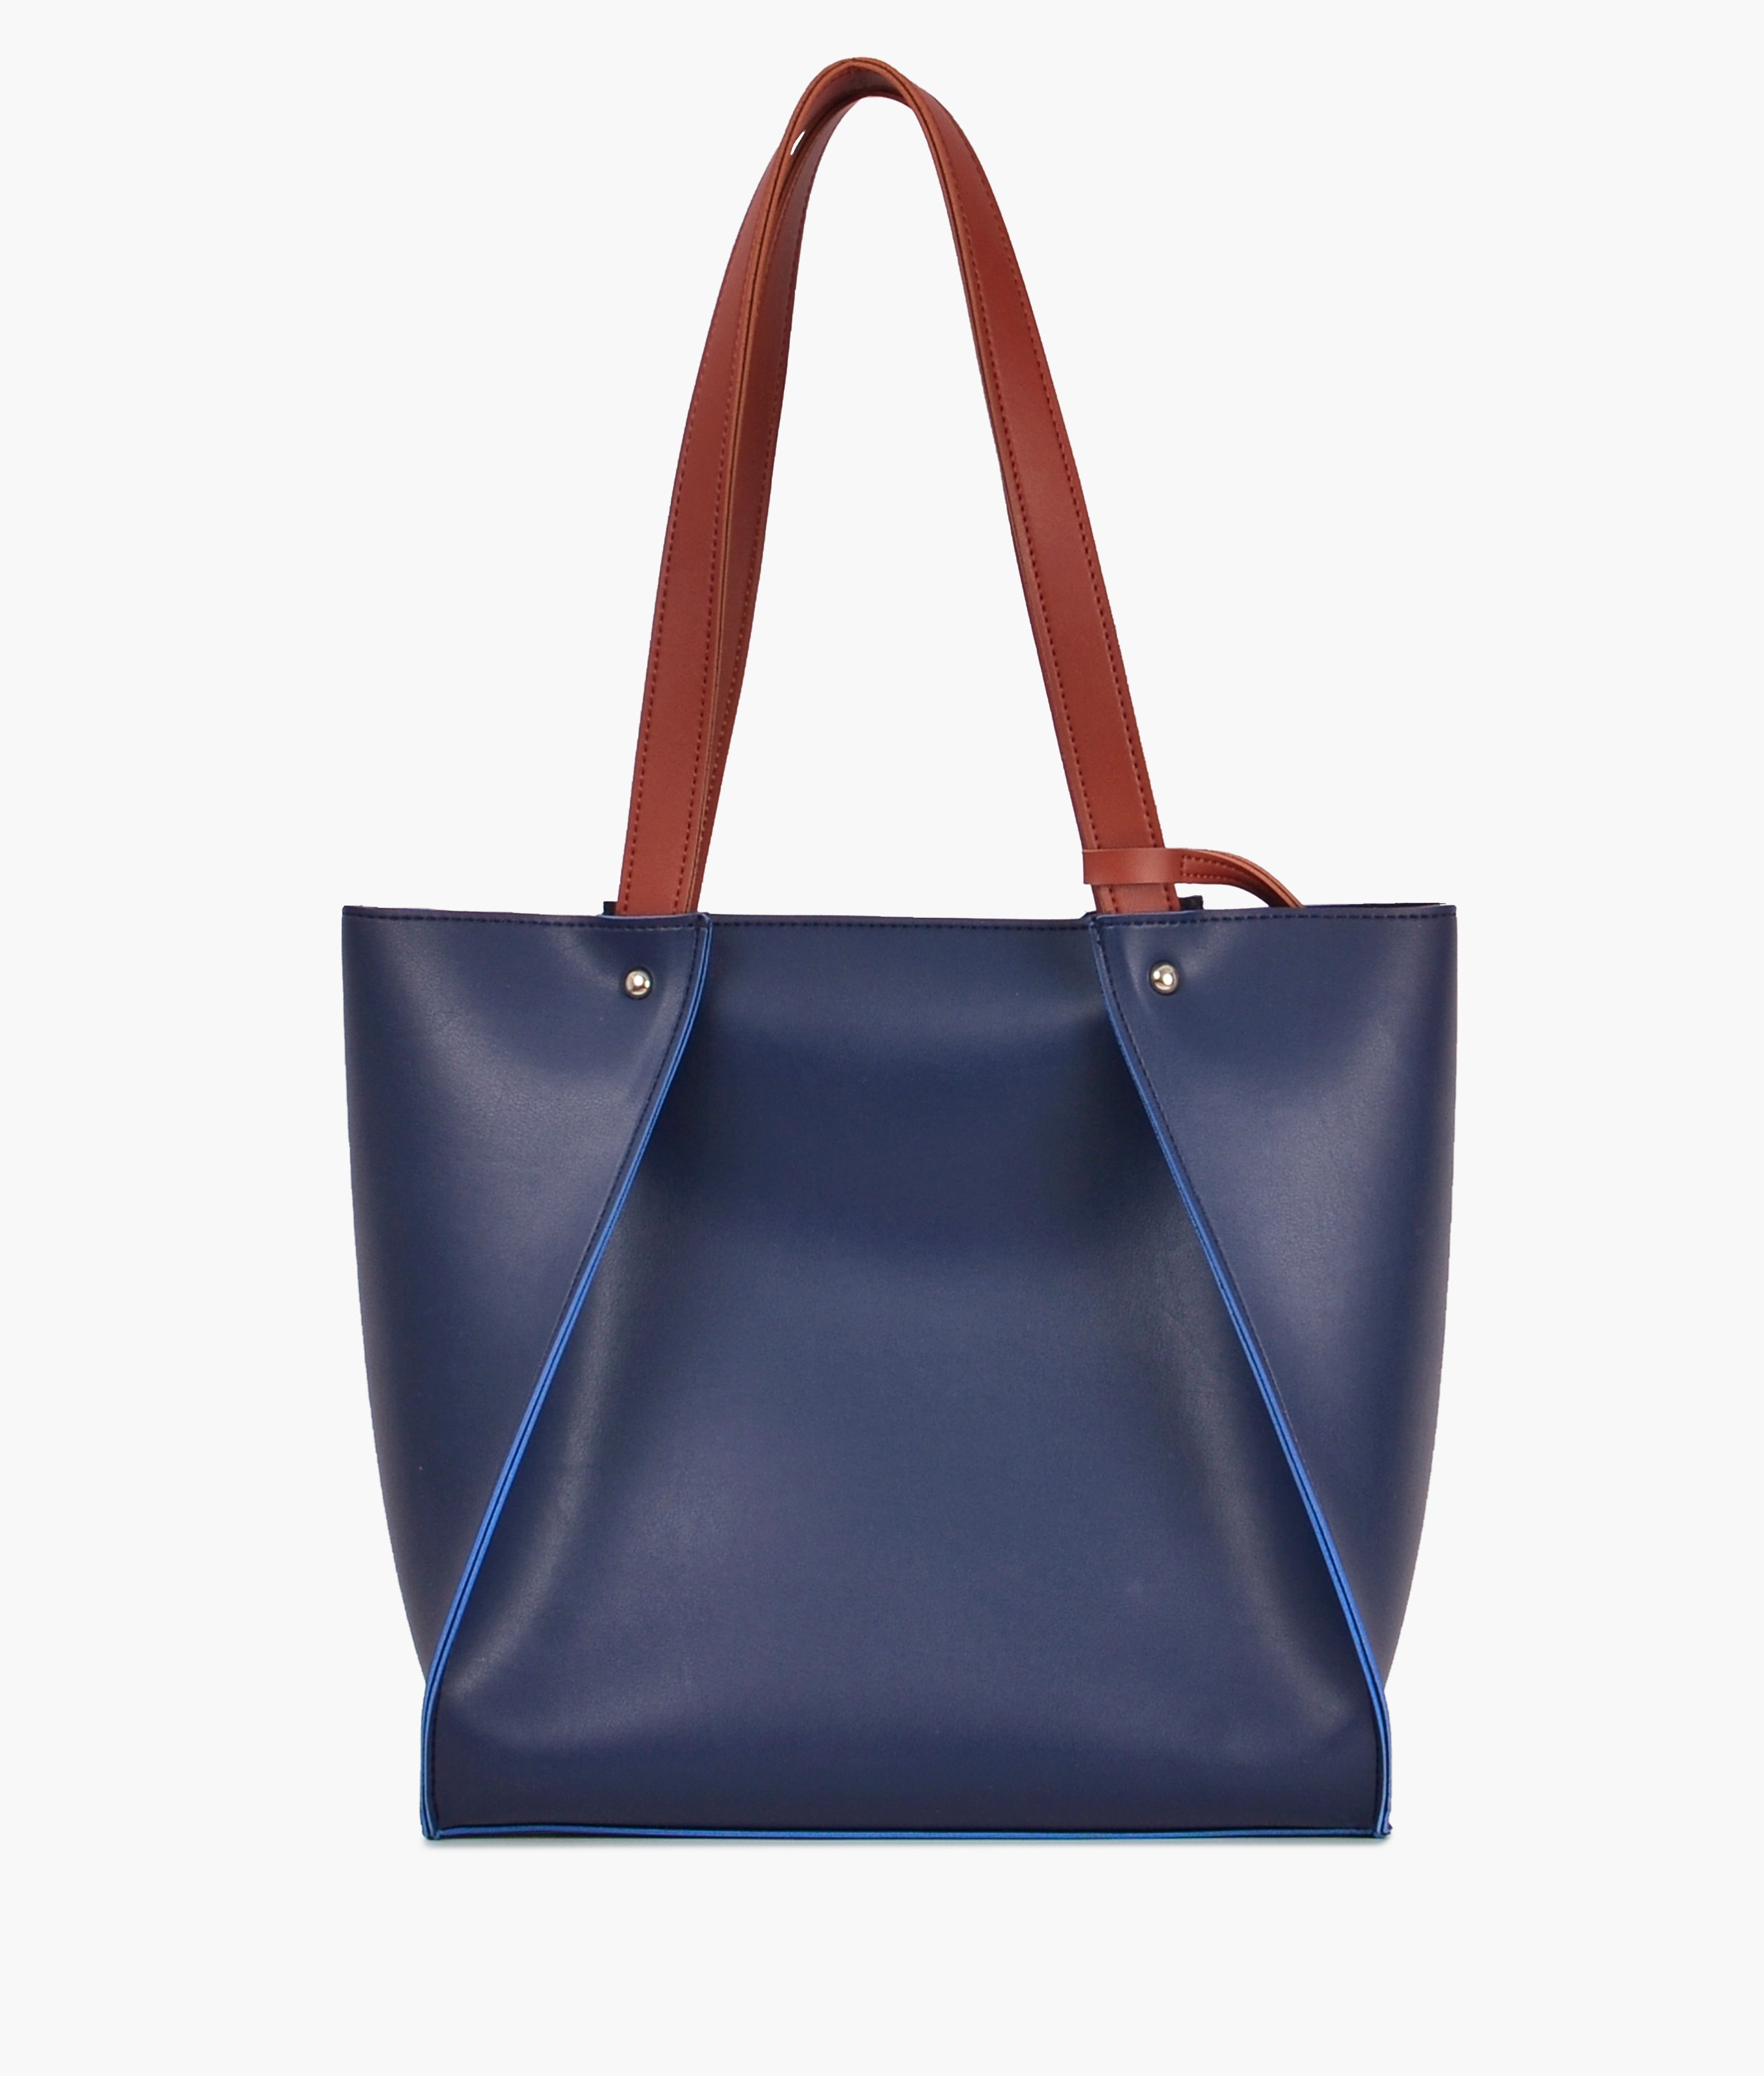 Blue shopping tote bag